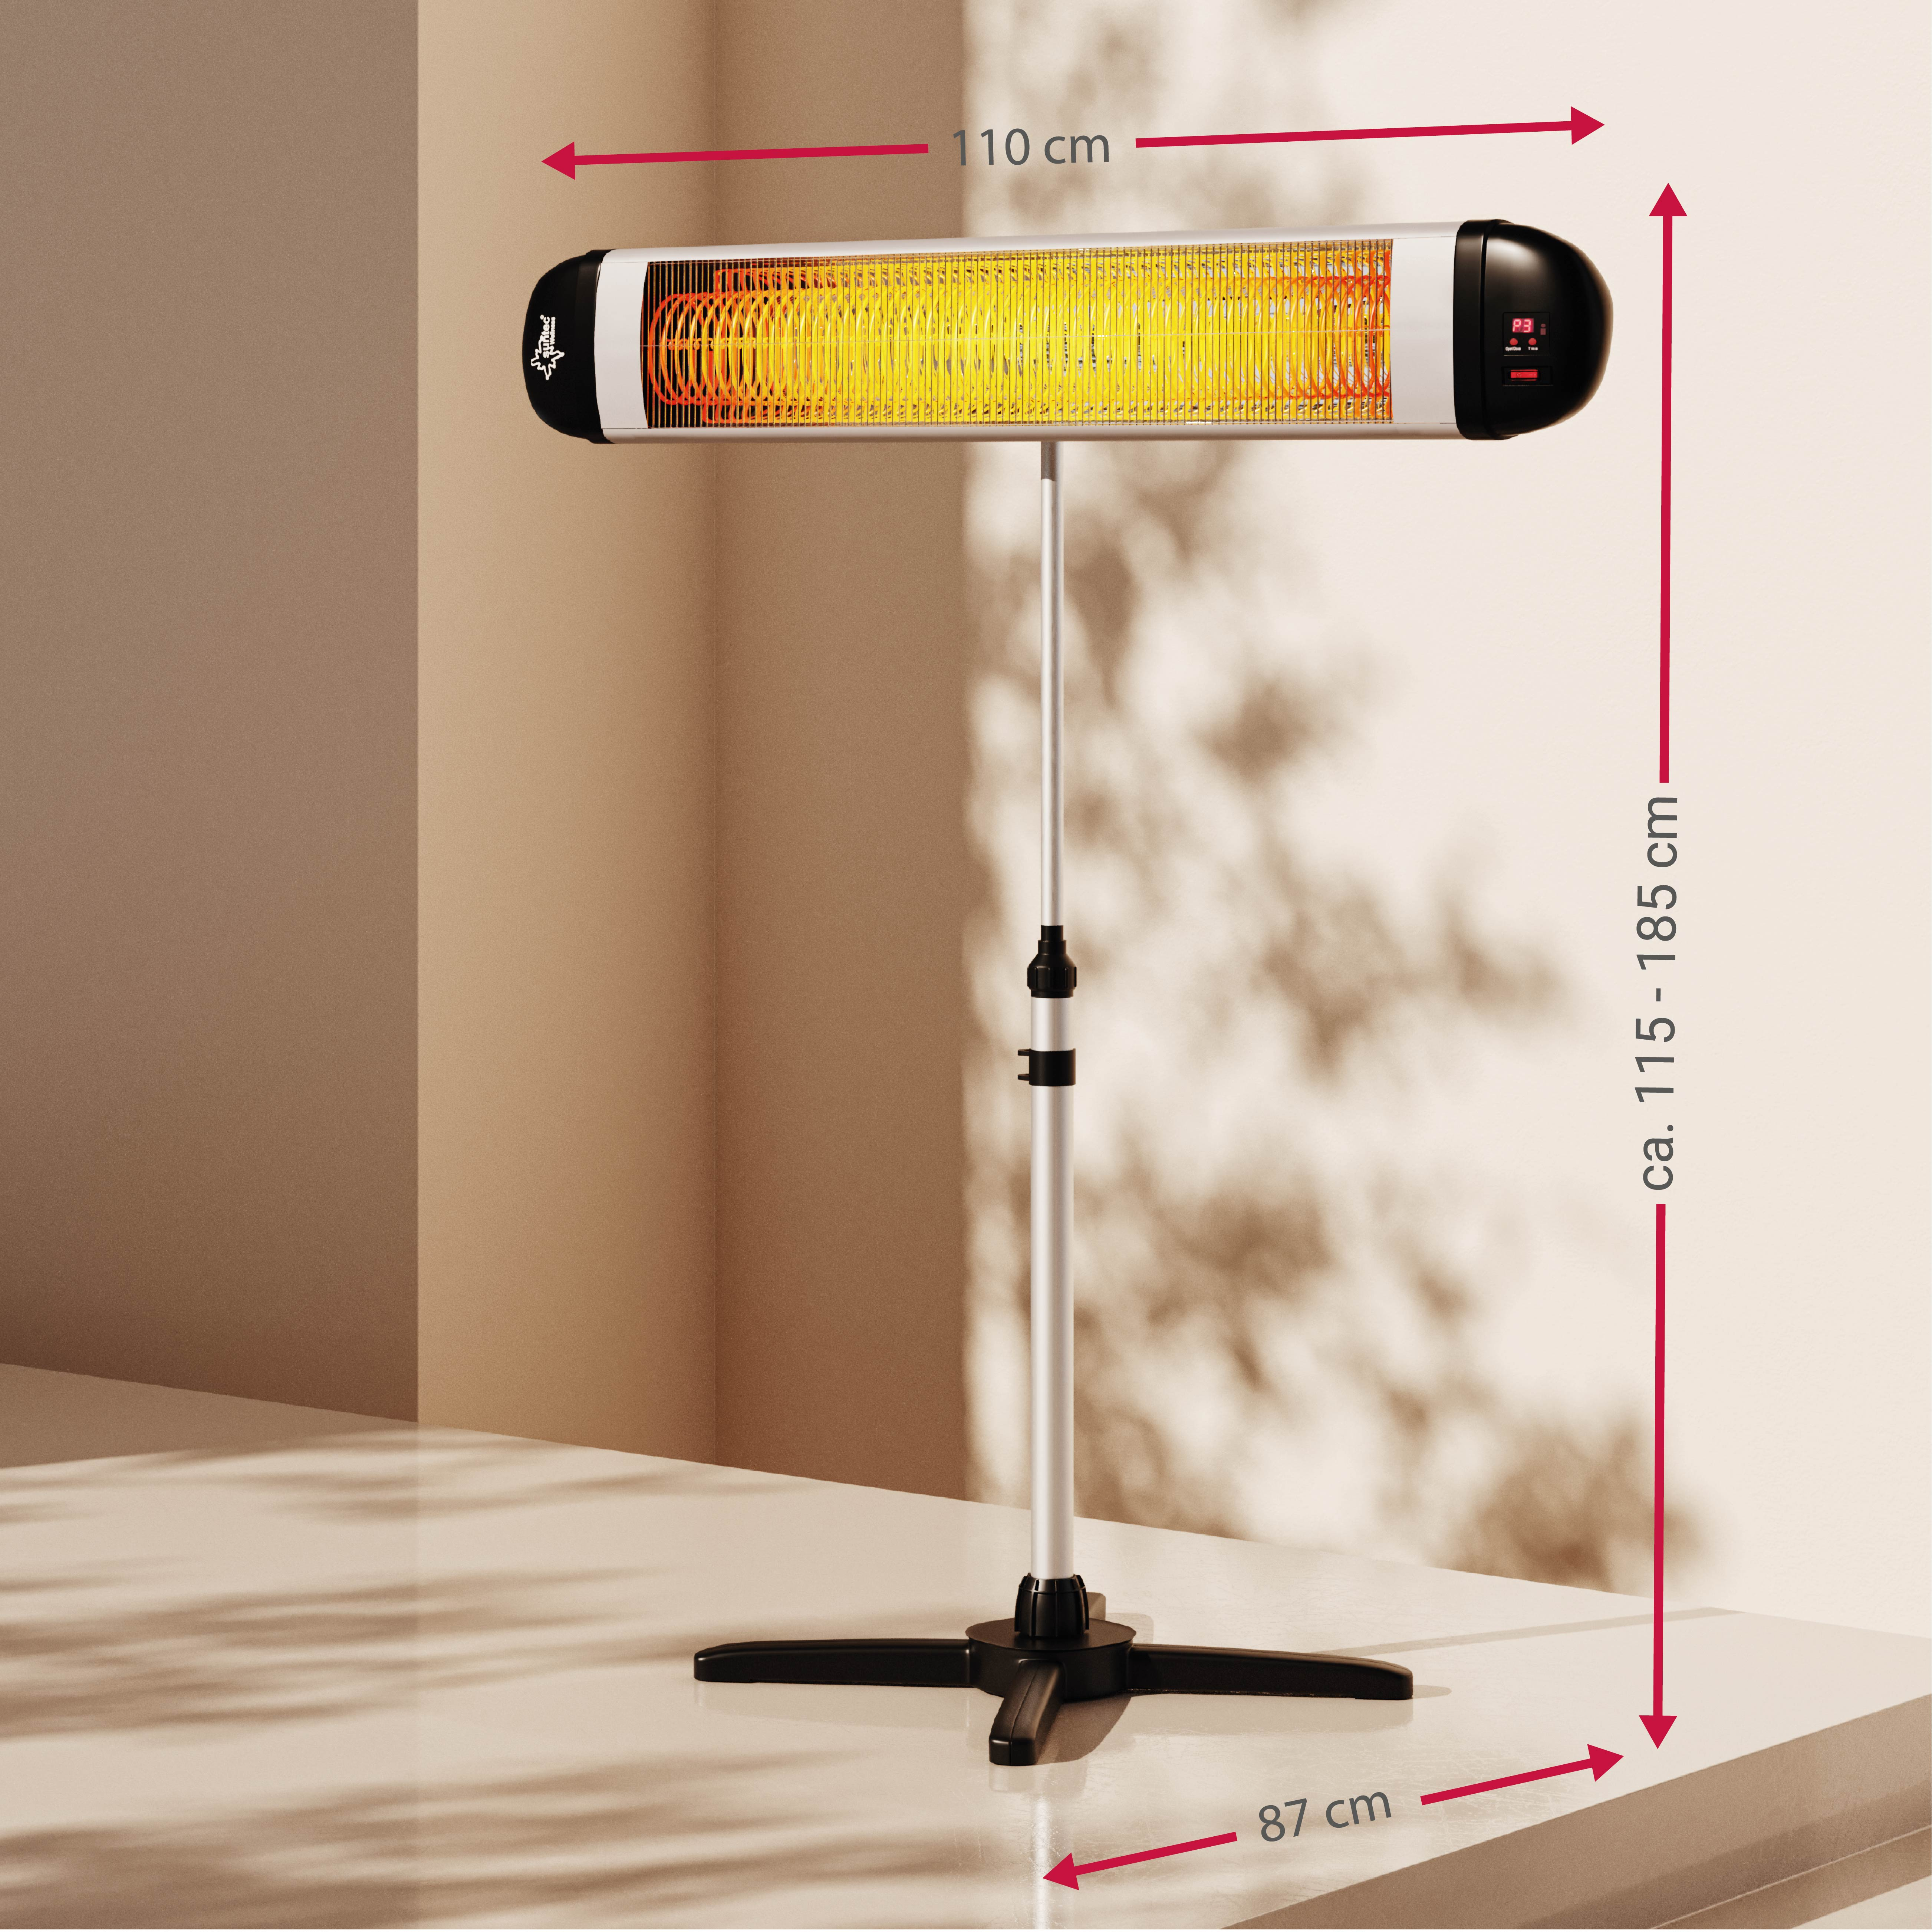 SUNTEC Heat Ray Carbon Watt) Wärmestrahler 3000 Stand-Heizstrahler Balkonheizer Elektrischer Outdoor Gartenheizung (3000